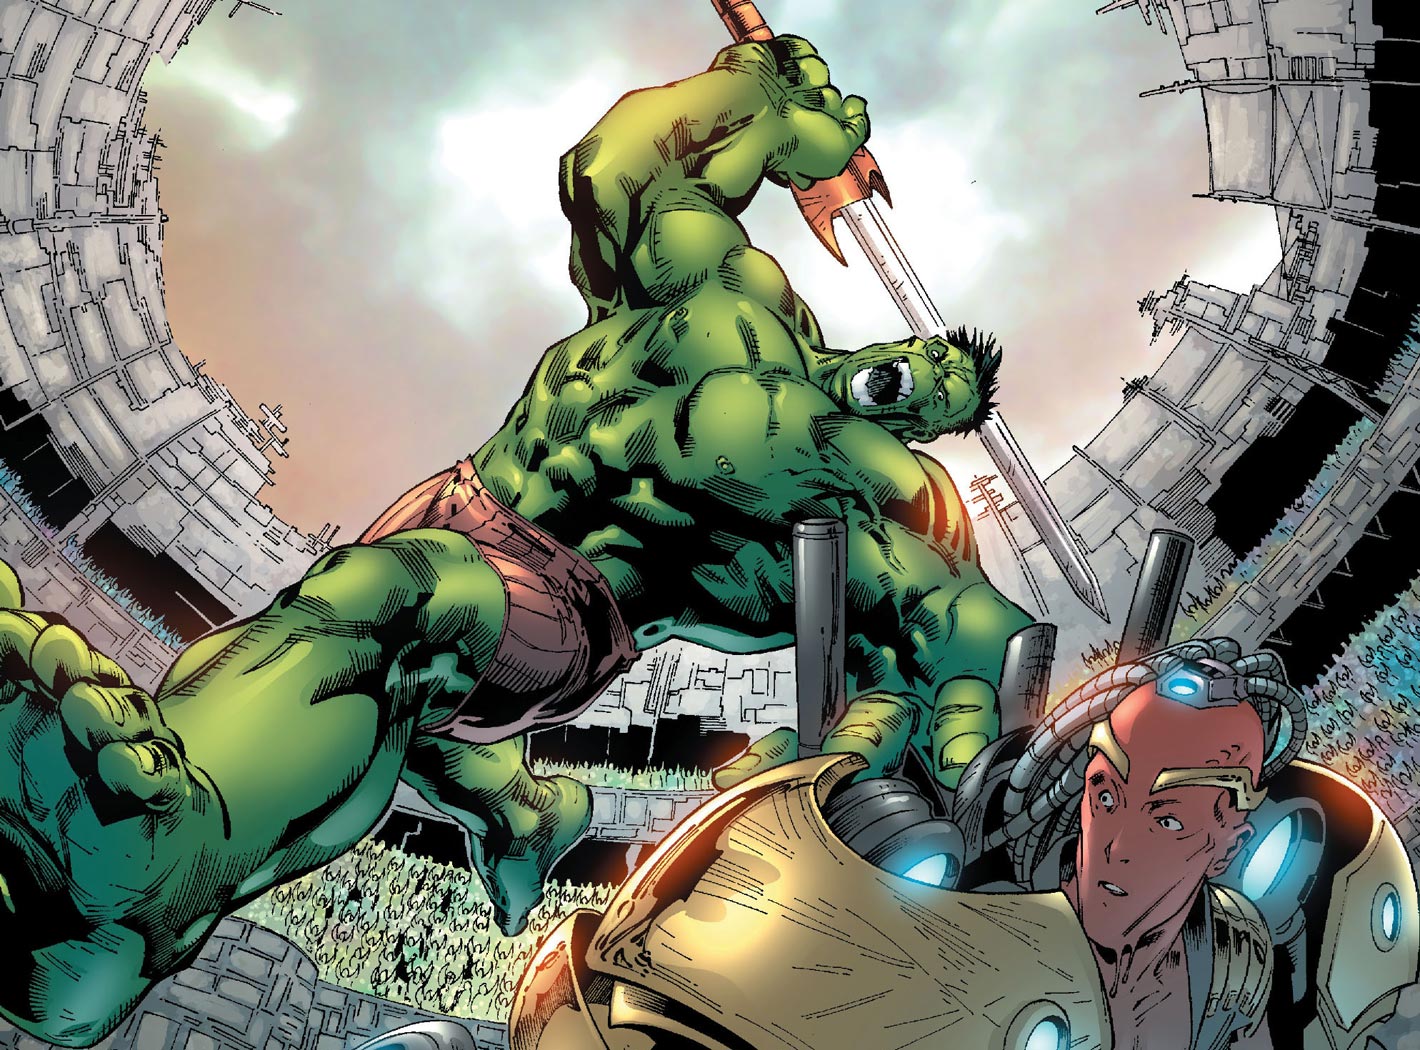 How the Original Planet Hulk Comic Provides the Backdrop for Thor: Ragnarok